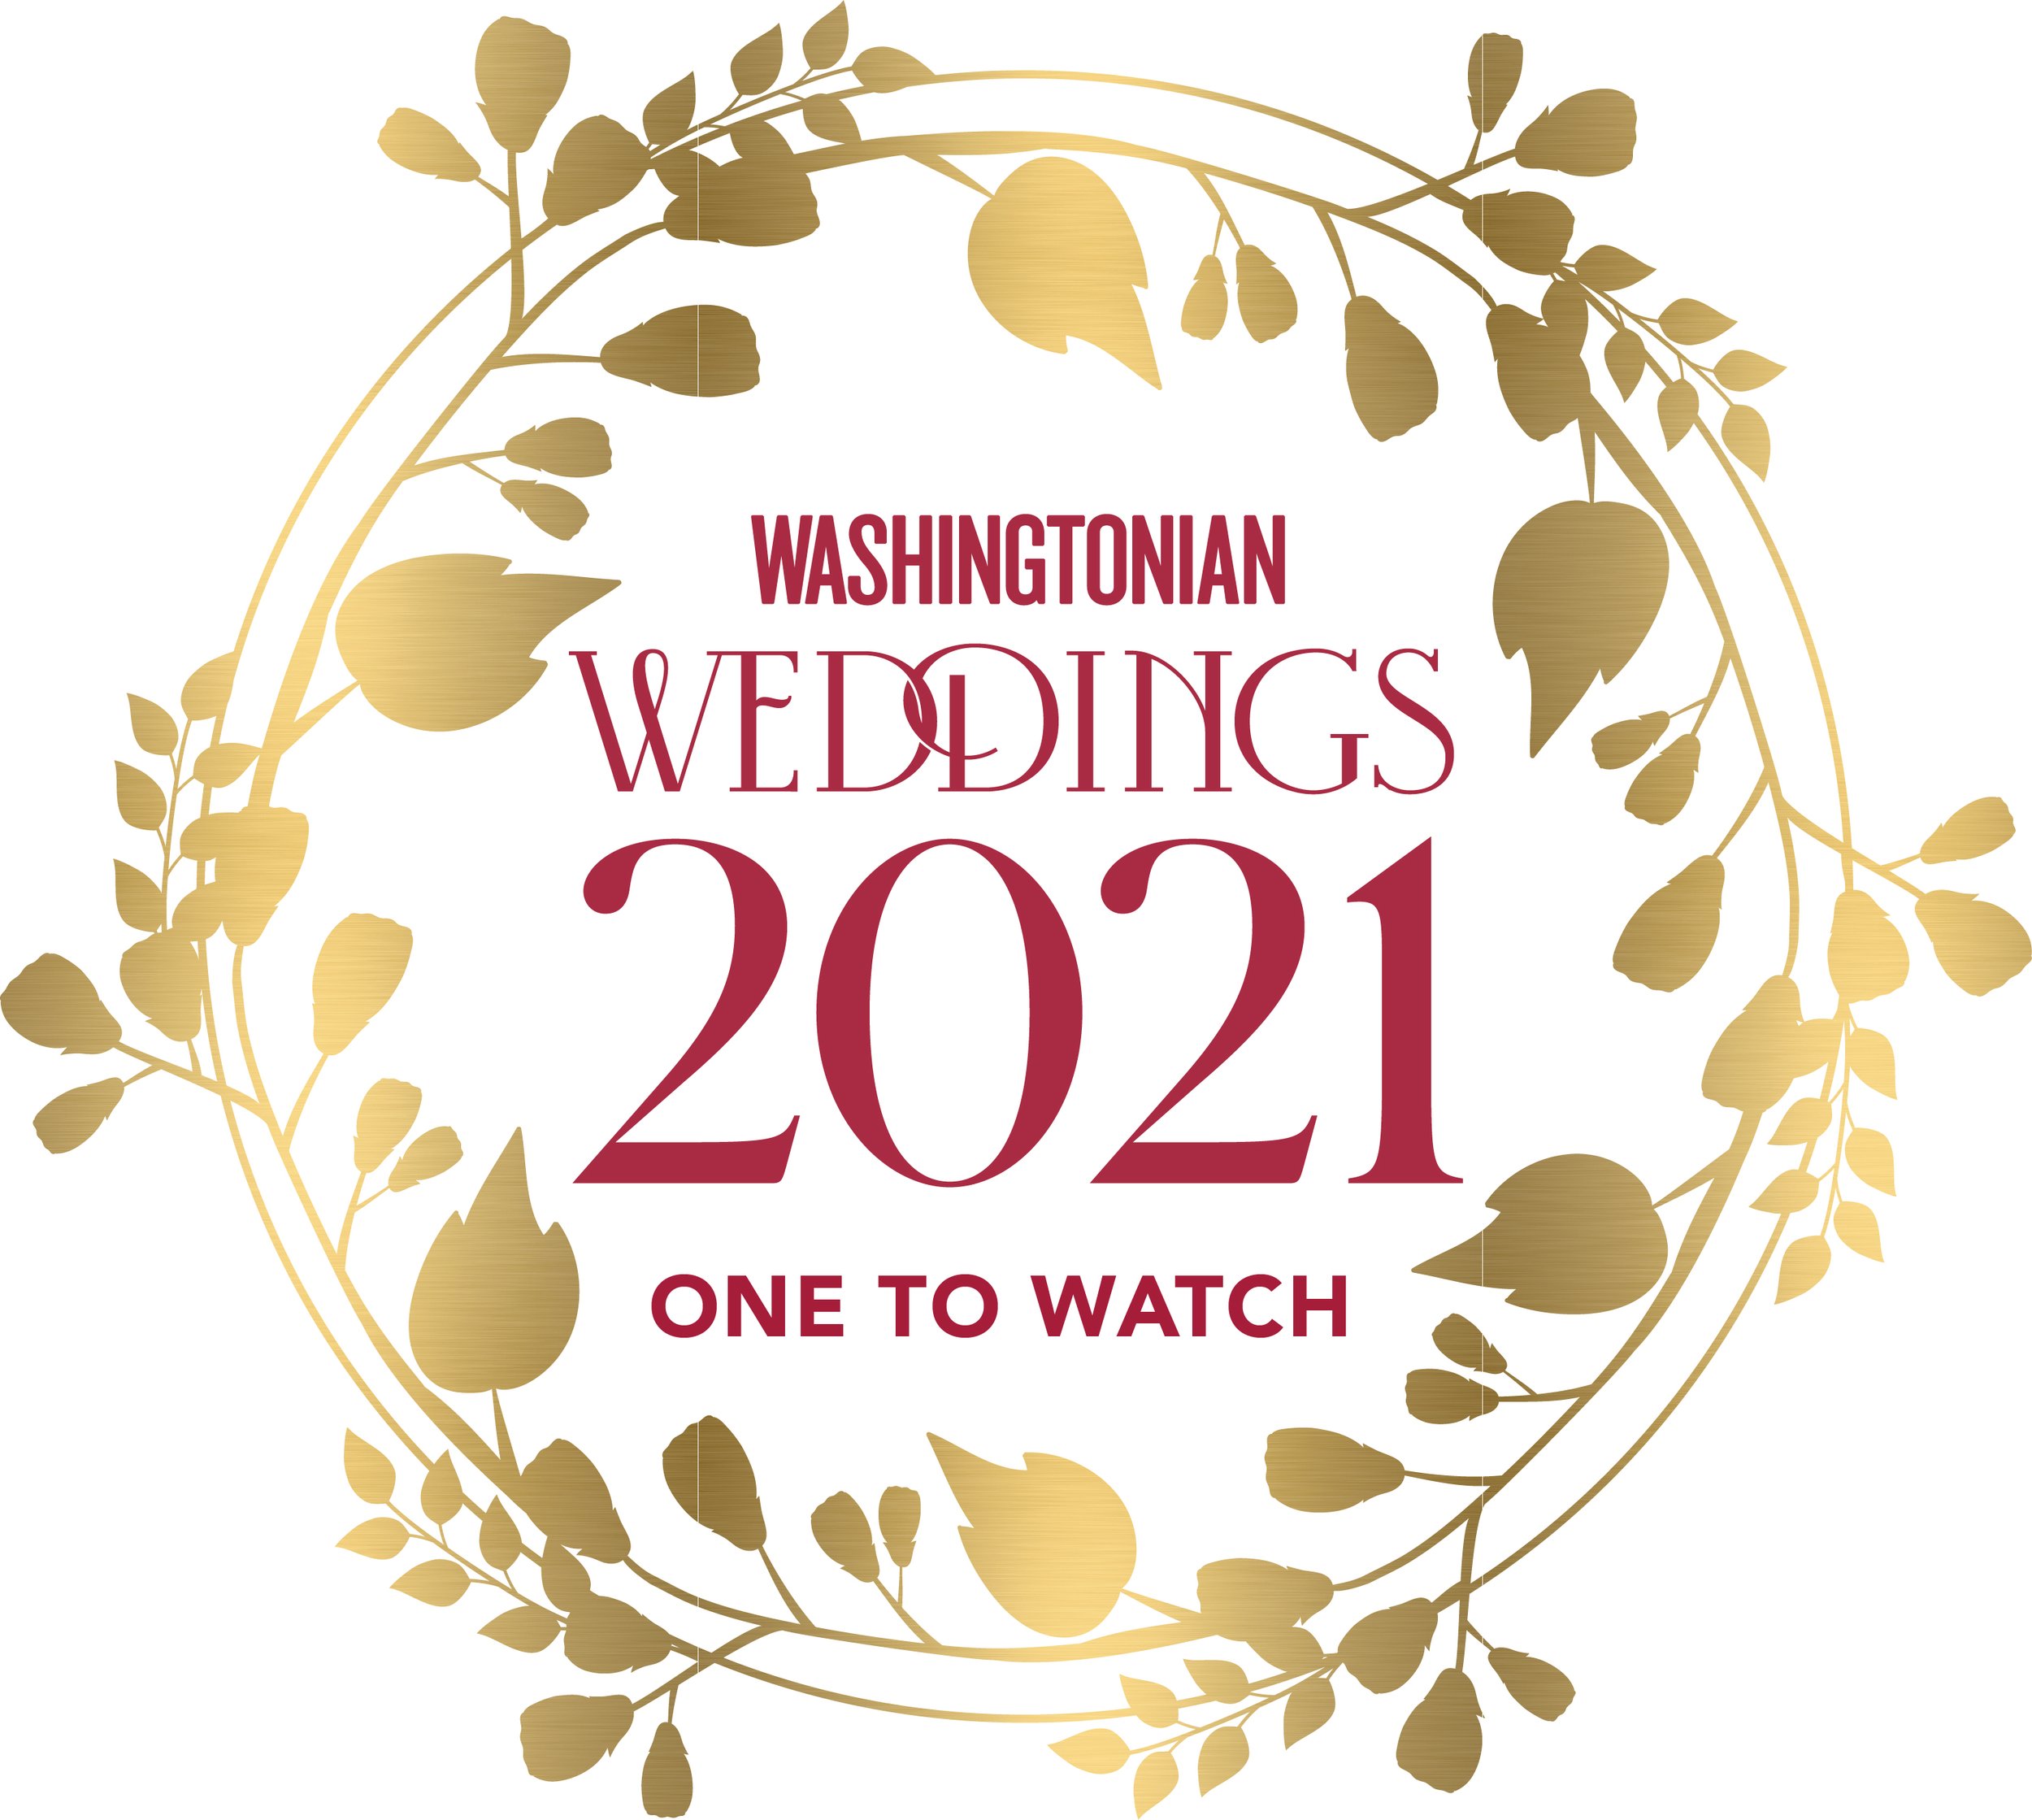 Washingtonian Weddings One to Watch 2021 Badge.jpg